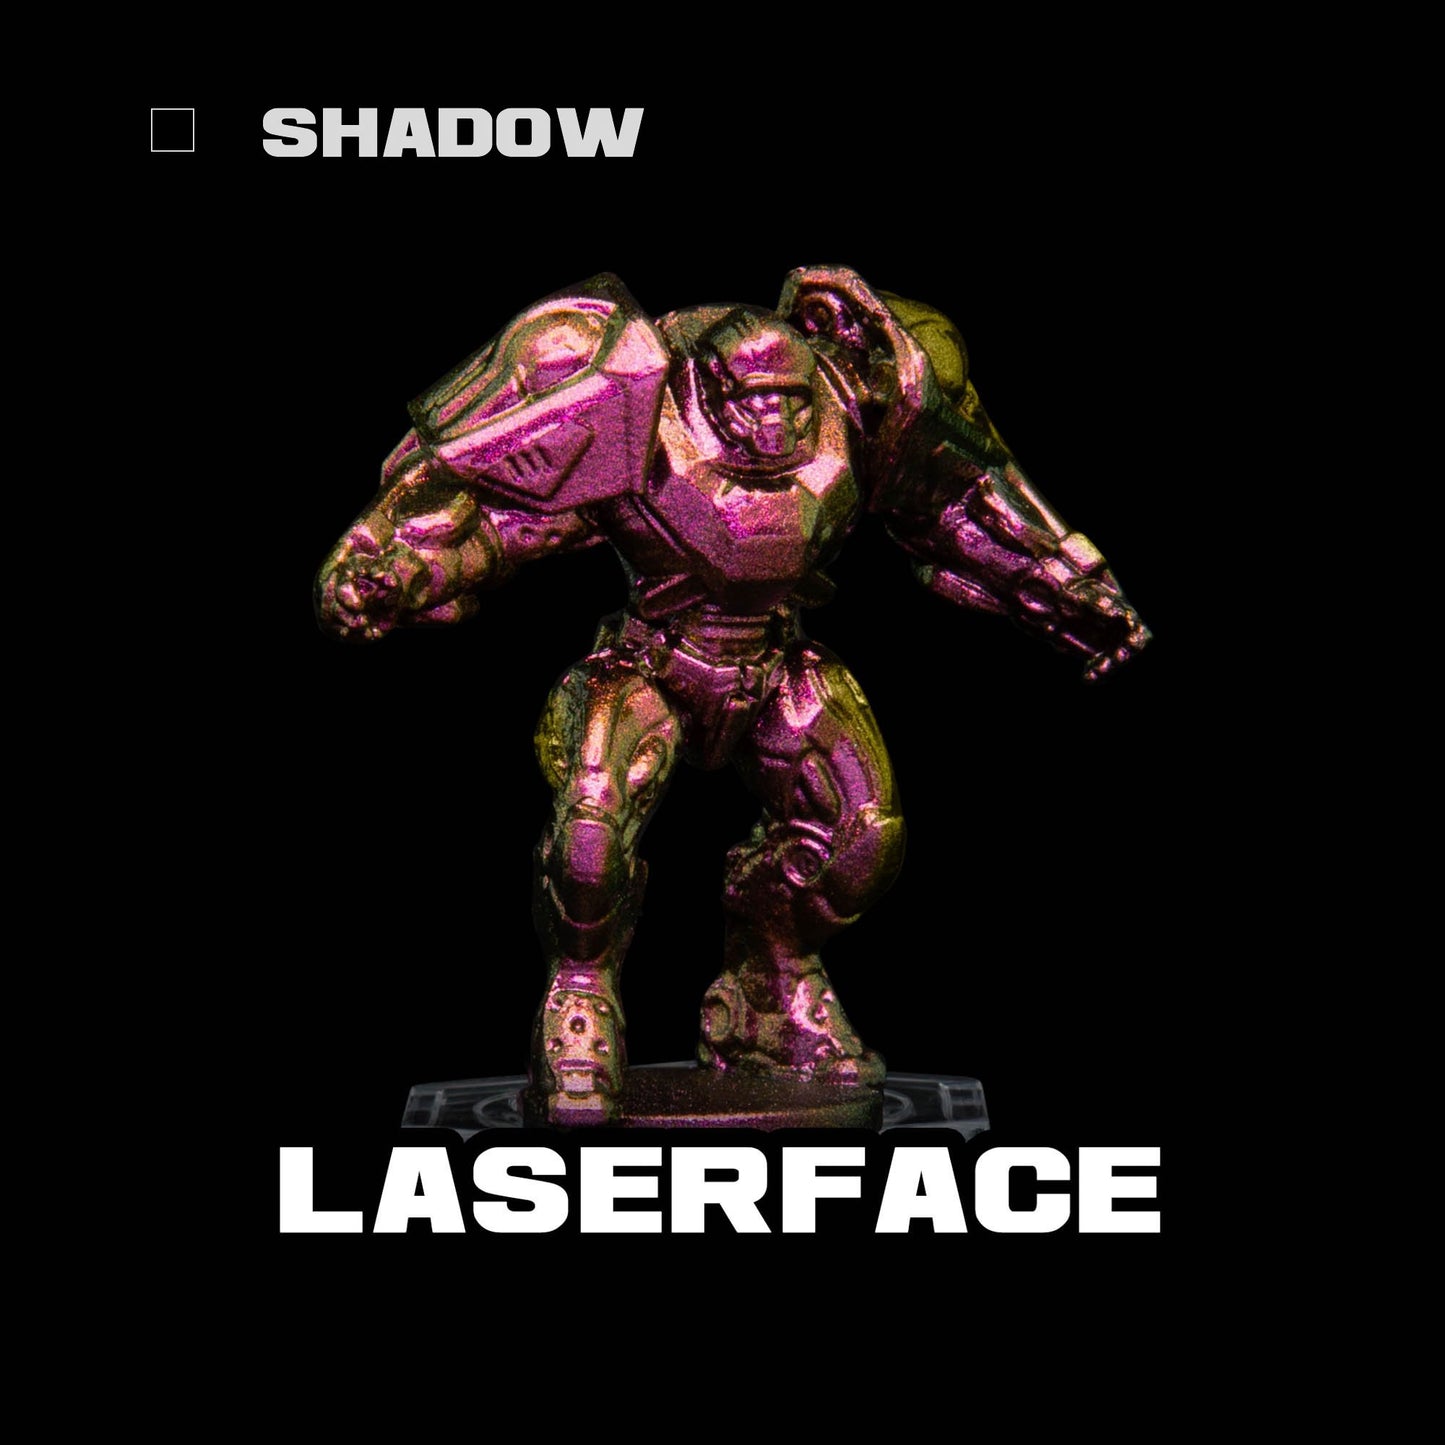 Laserface